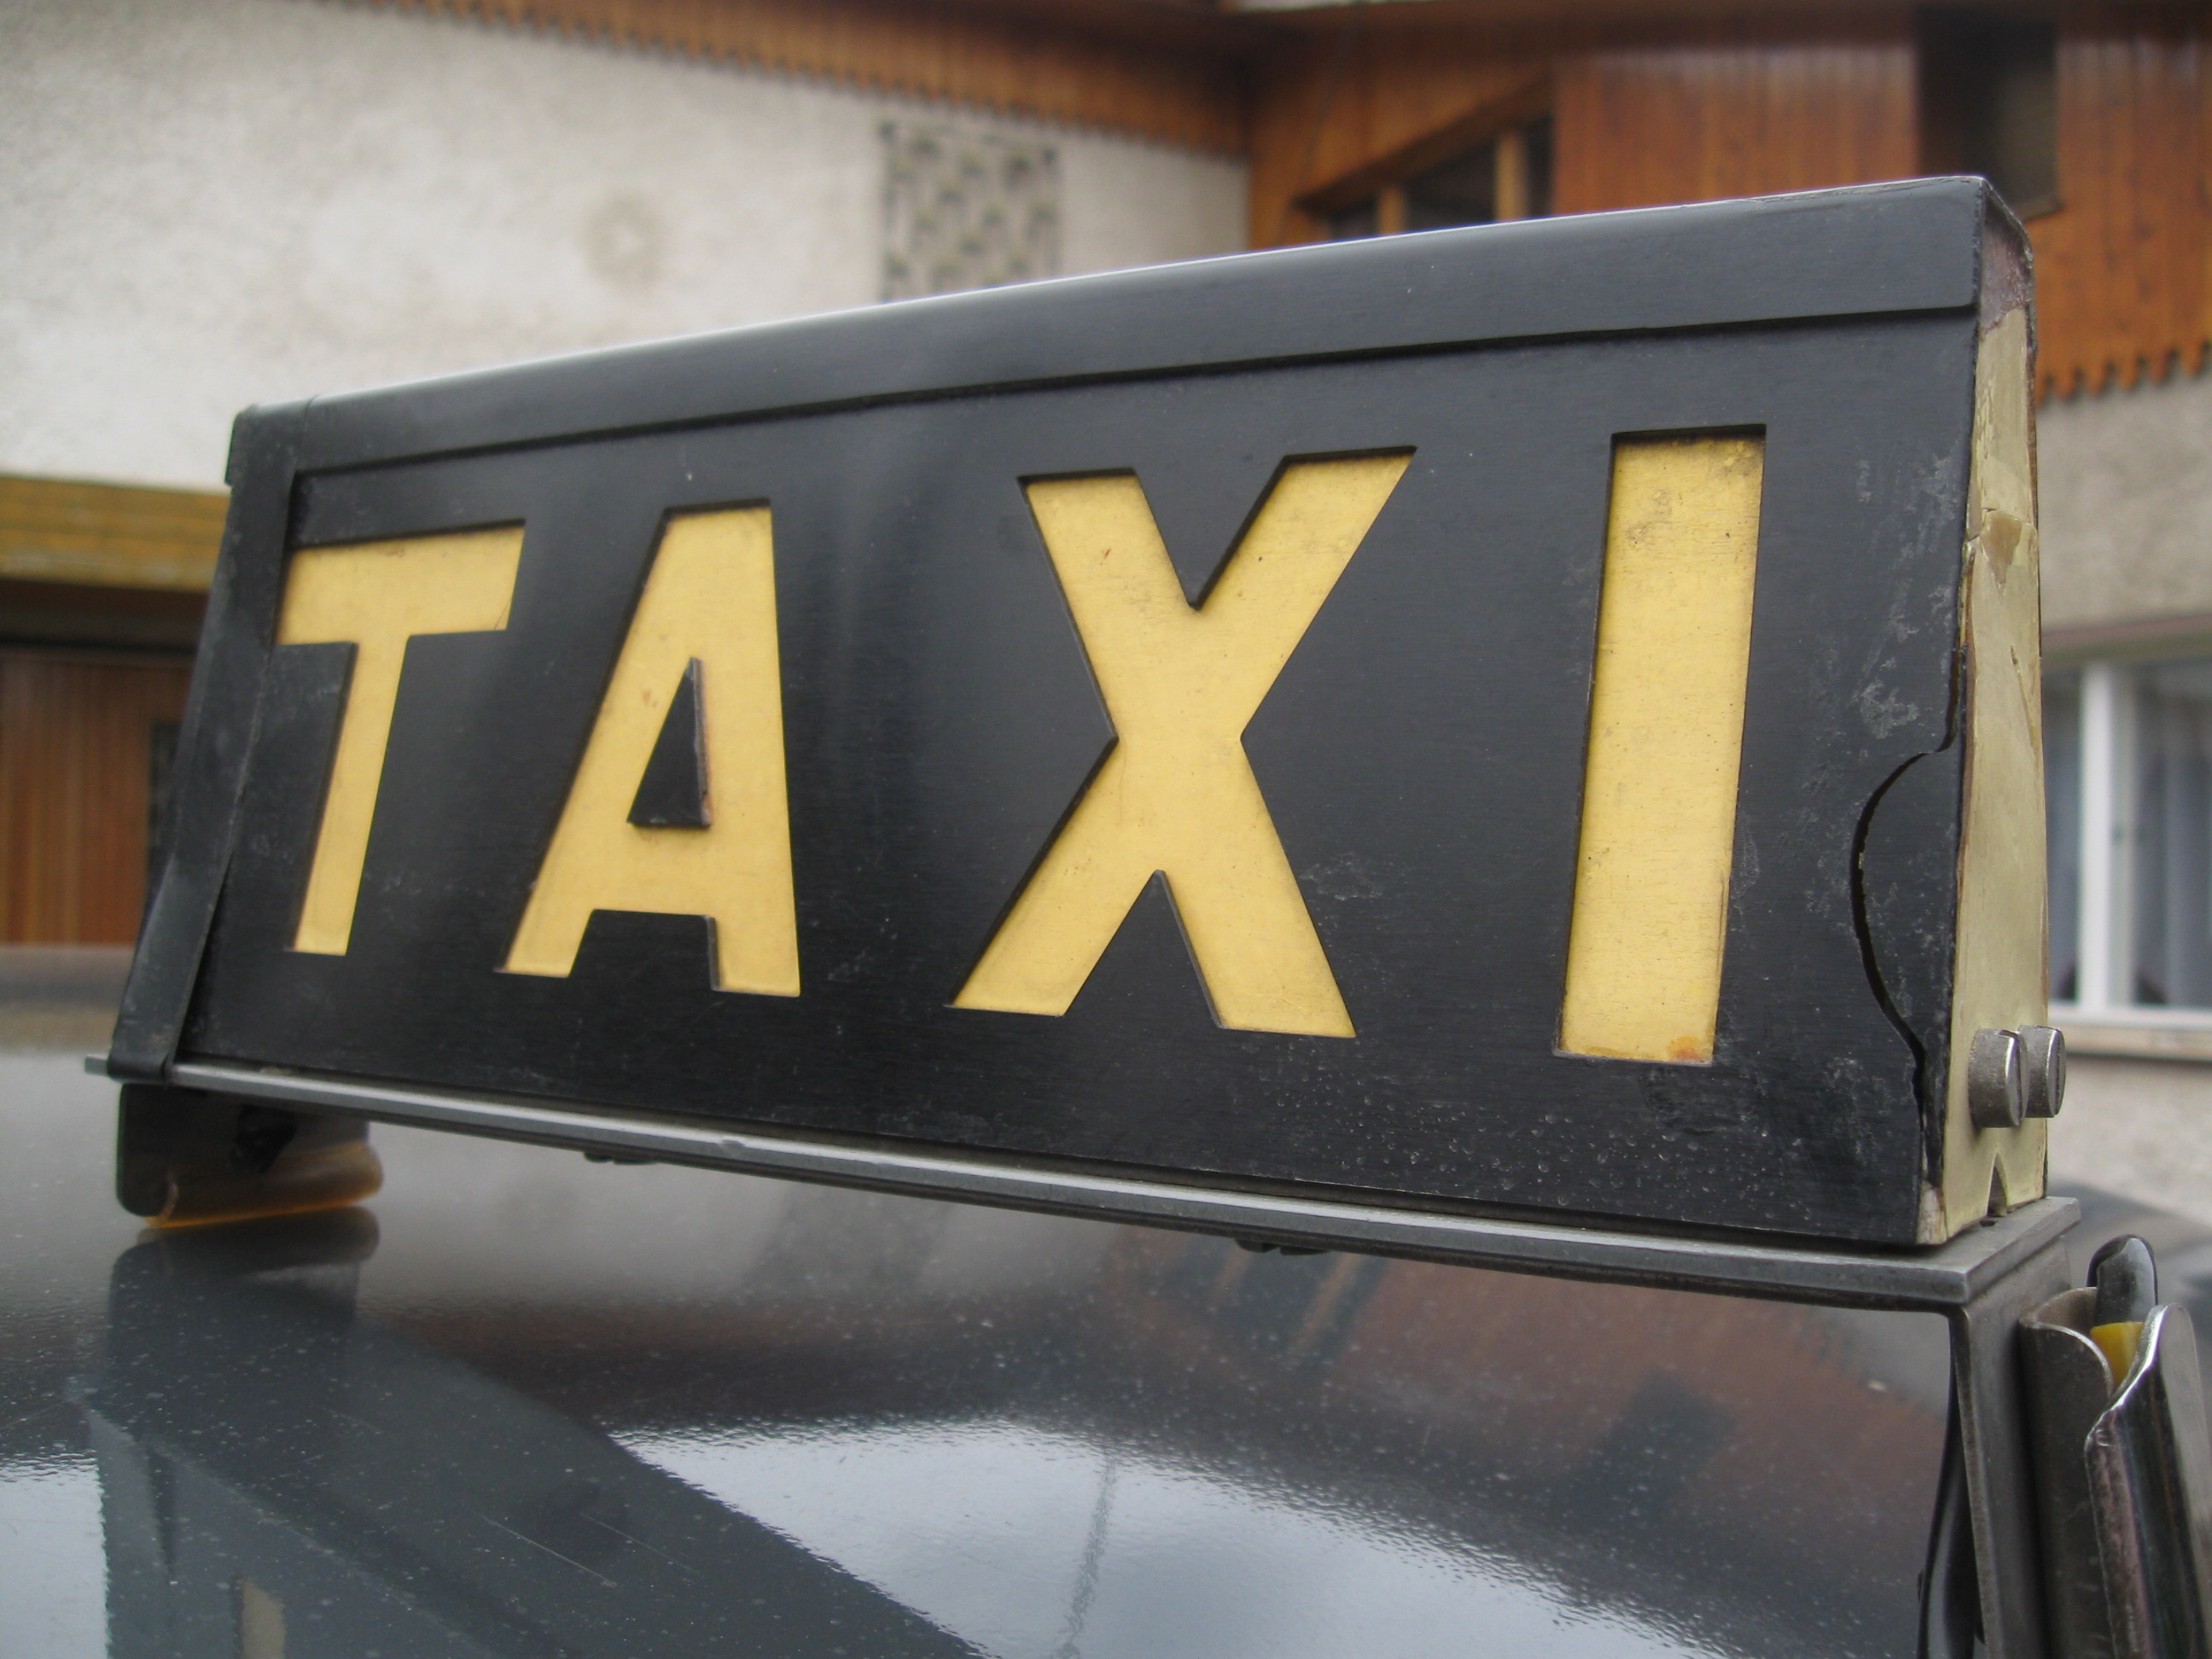 File:2014-03-23 Taxi-Schild DDR.jpg - Wikimedia Commons